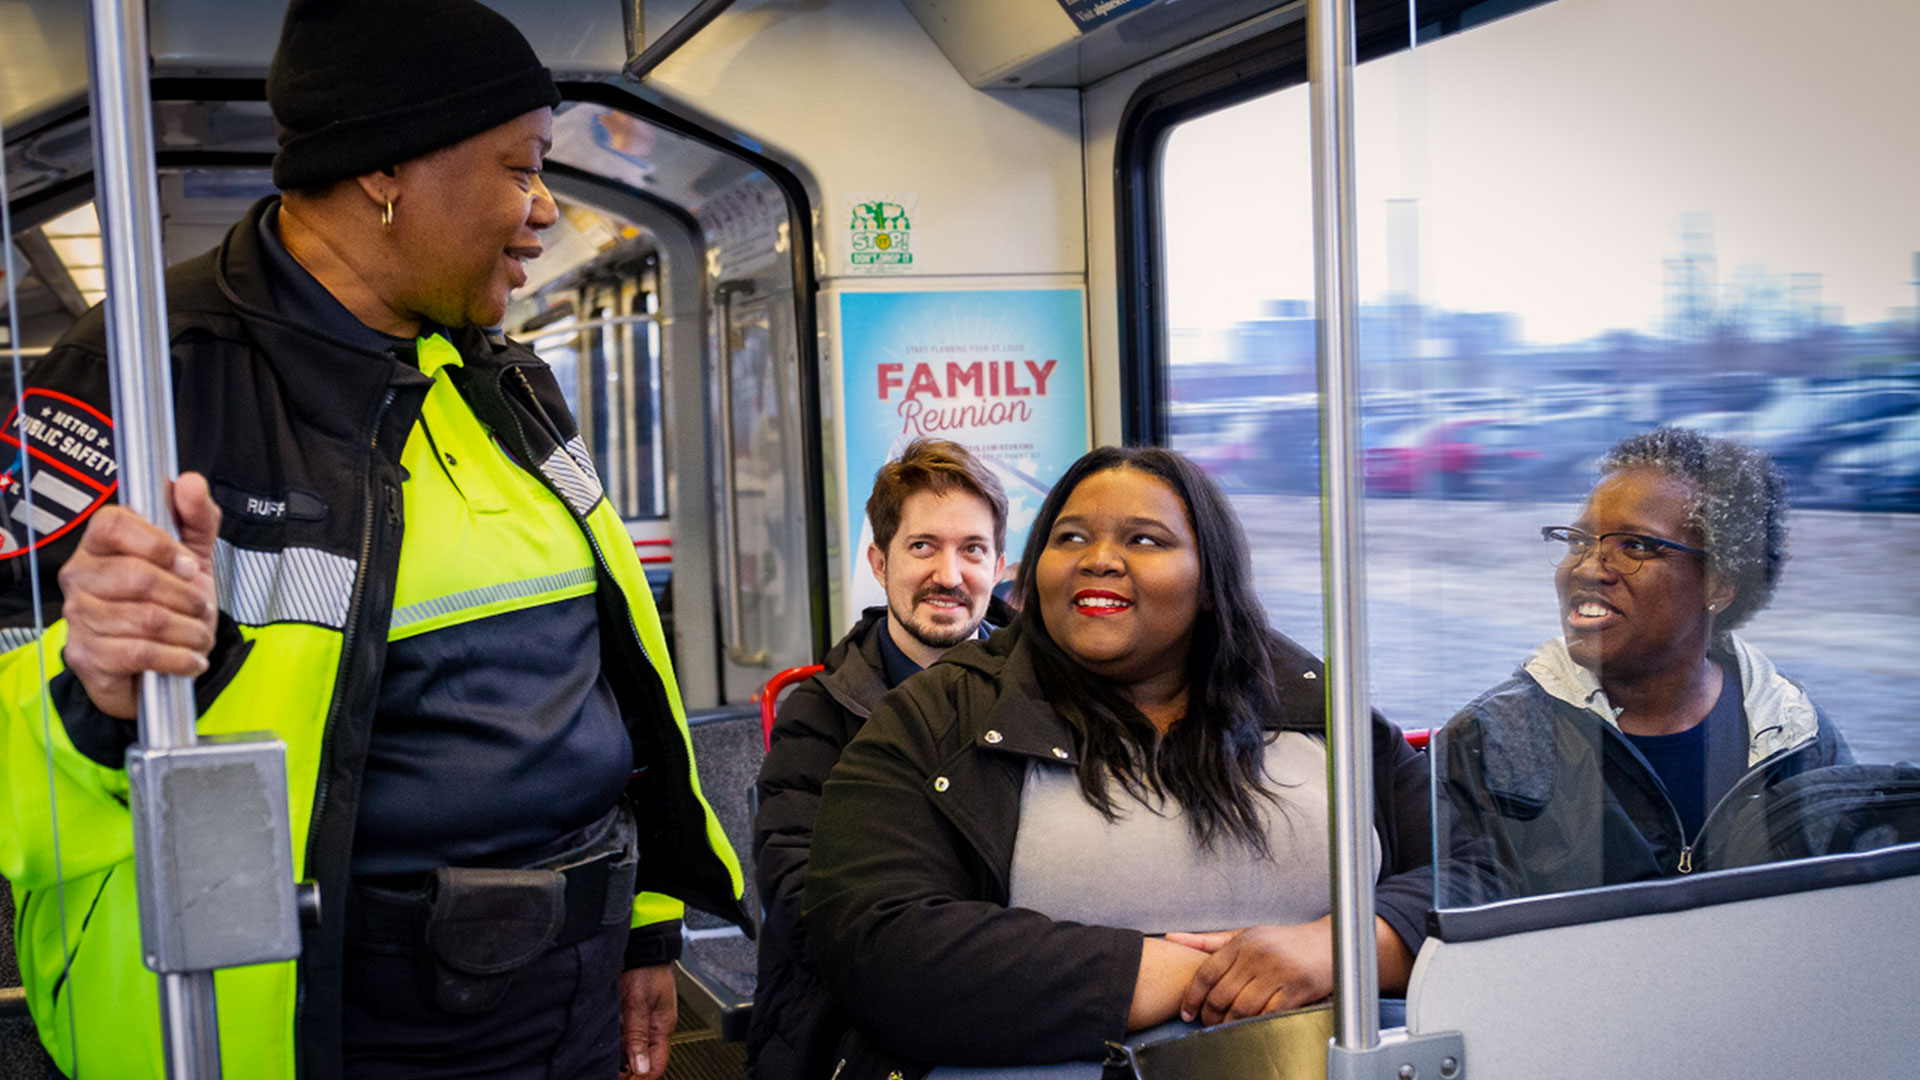 Metro security talks with passengers aboard MetroLink.